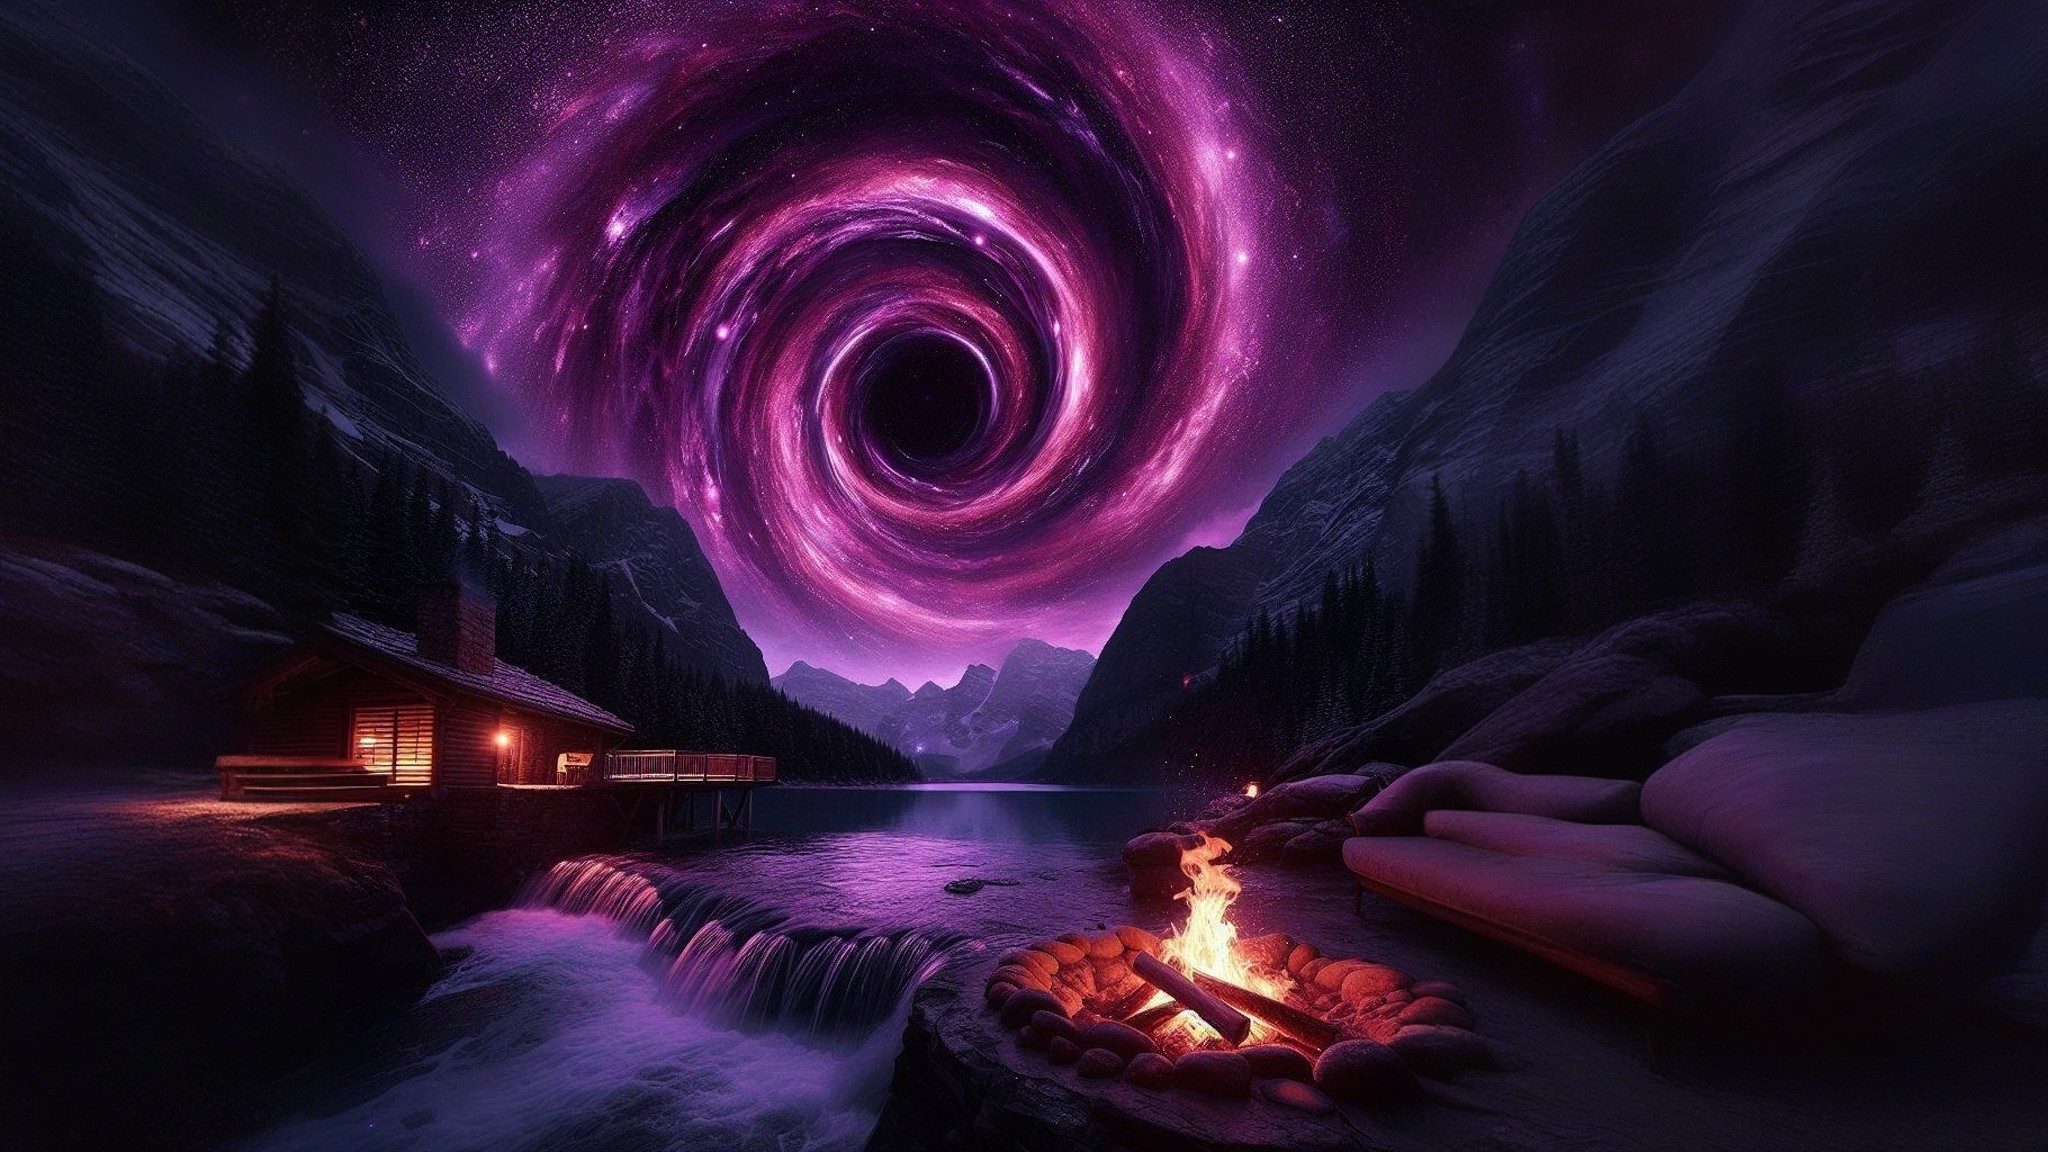 General 2048x1152 AI art digital art fantasy art wormhole violet (color) mountains river night campfire science fiction